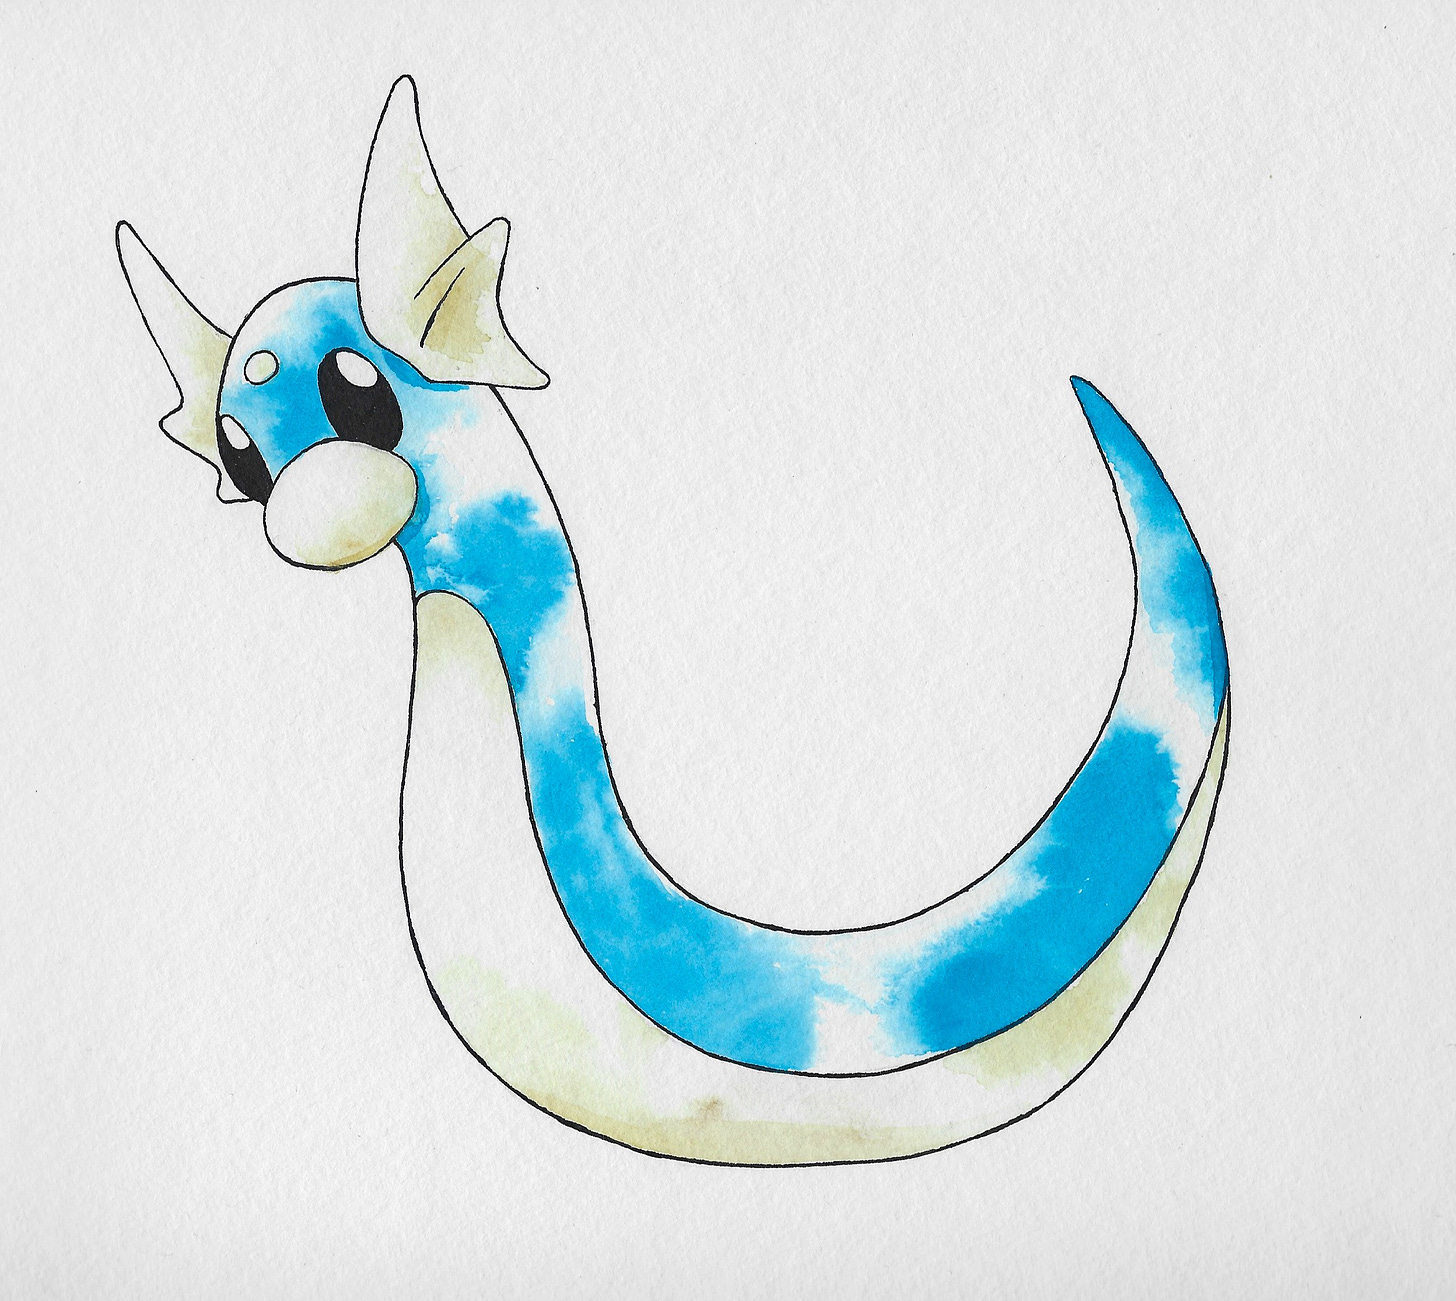 Dratini by Corylus, who took inspiration by Pokémon artist Ken Sugimori